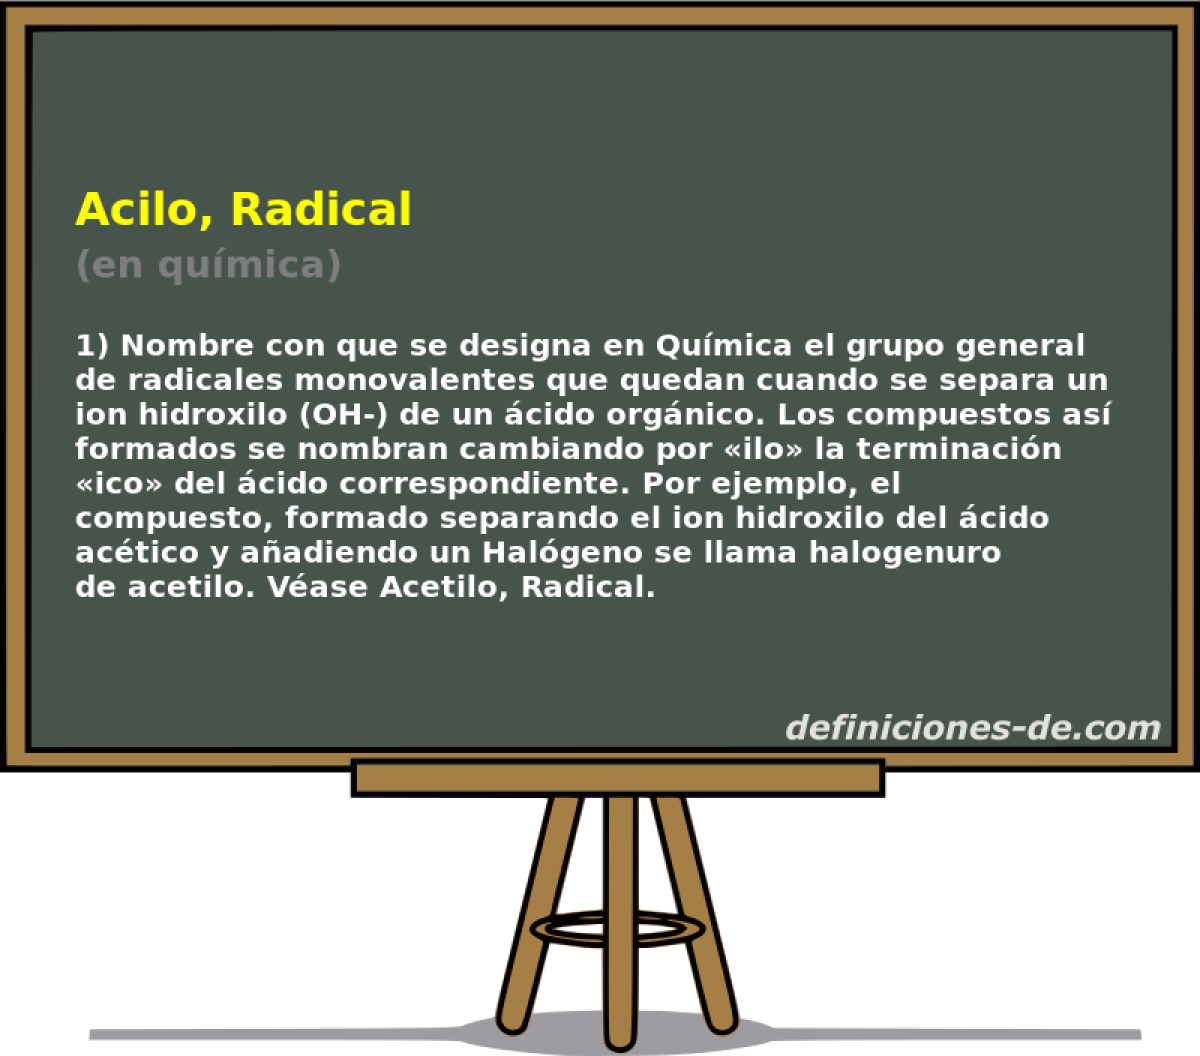 Acilo, Radical (en qumica)